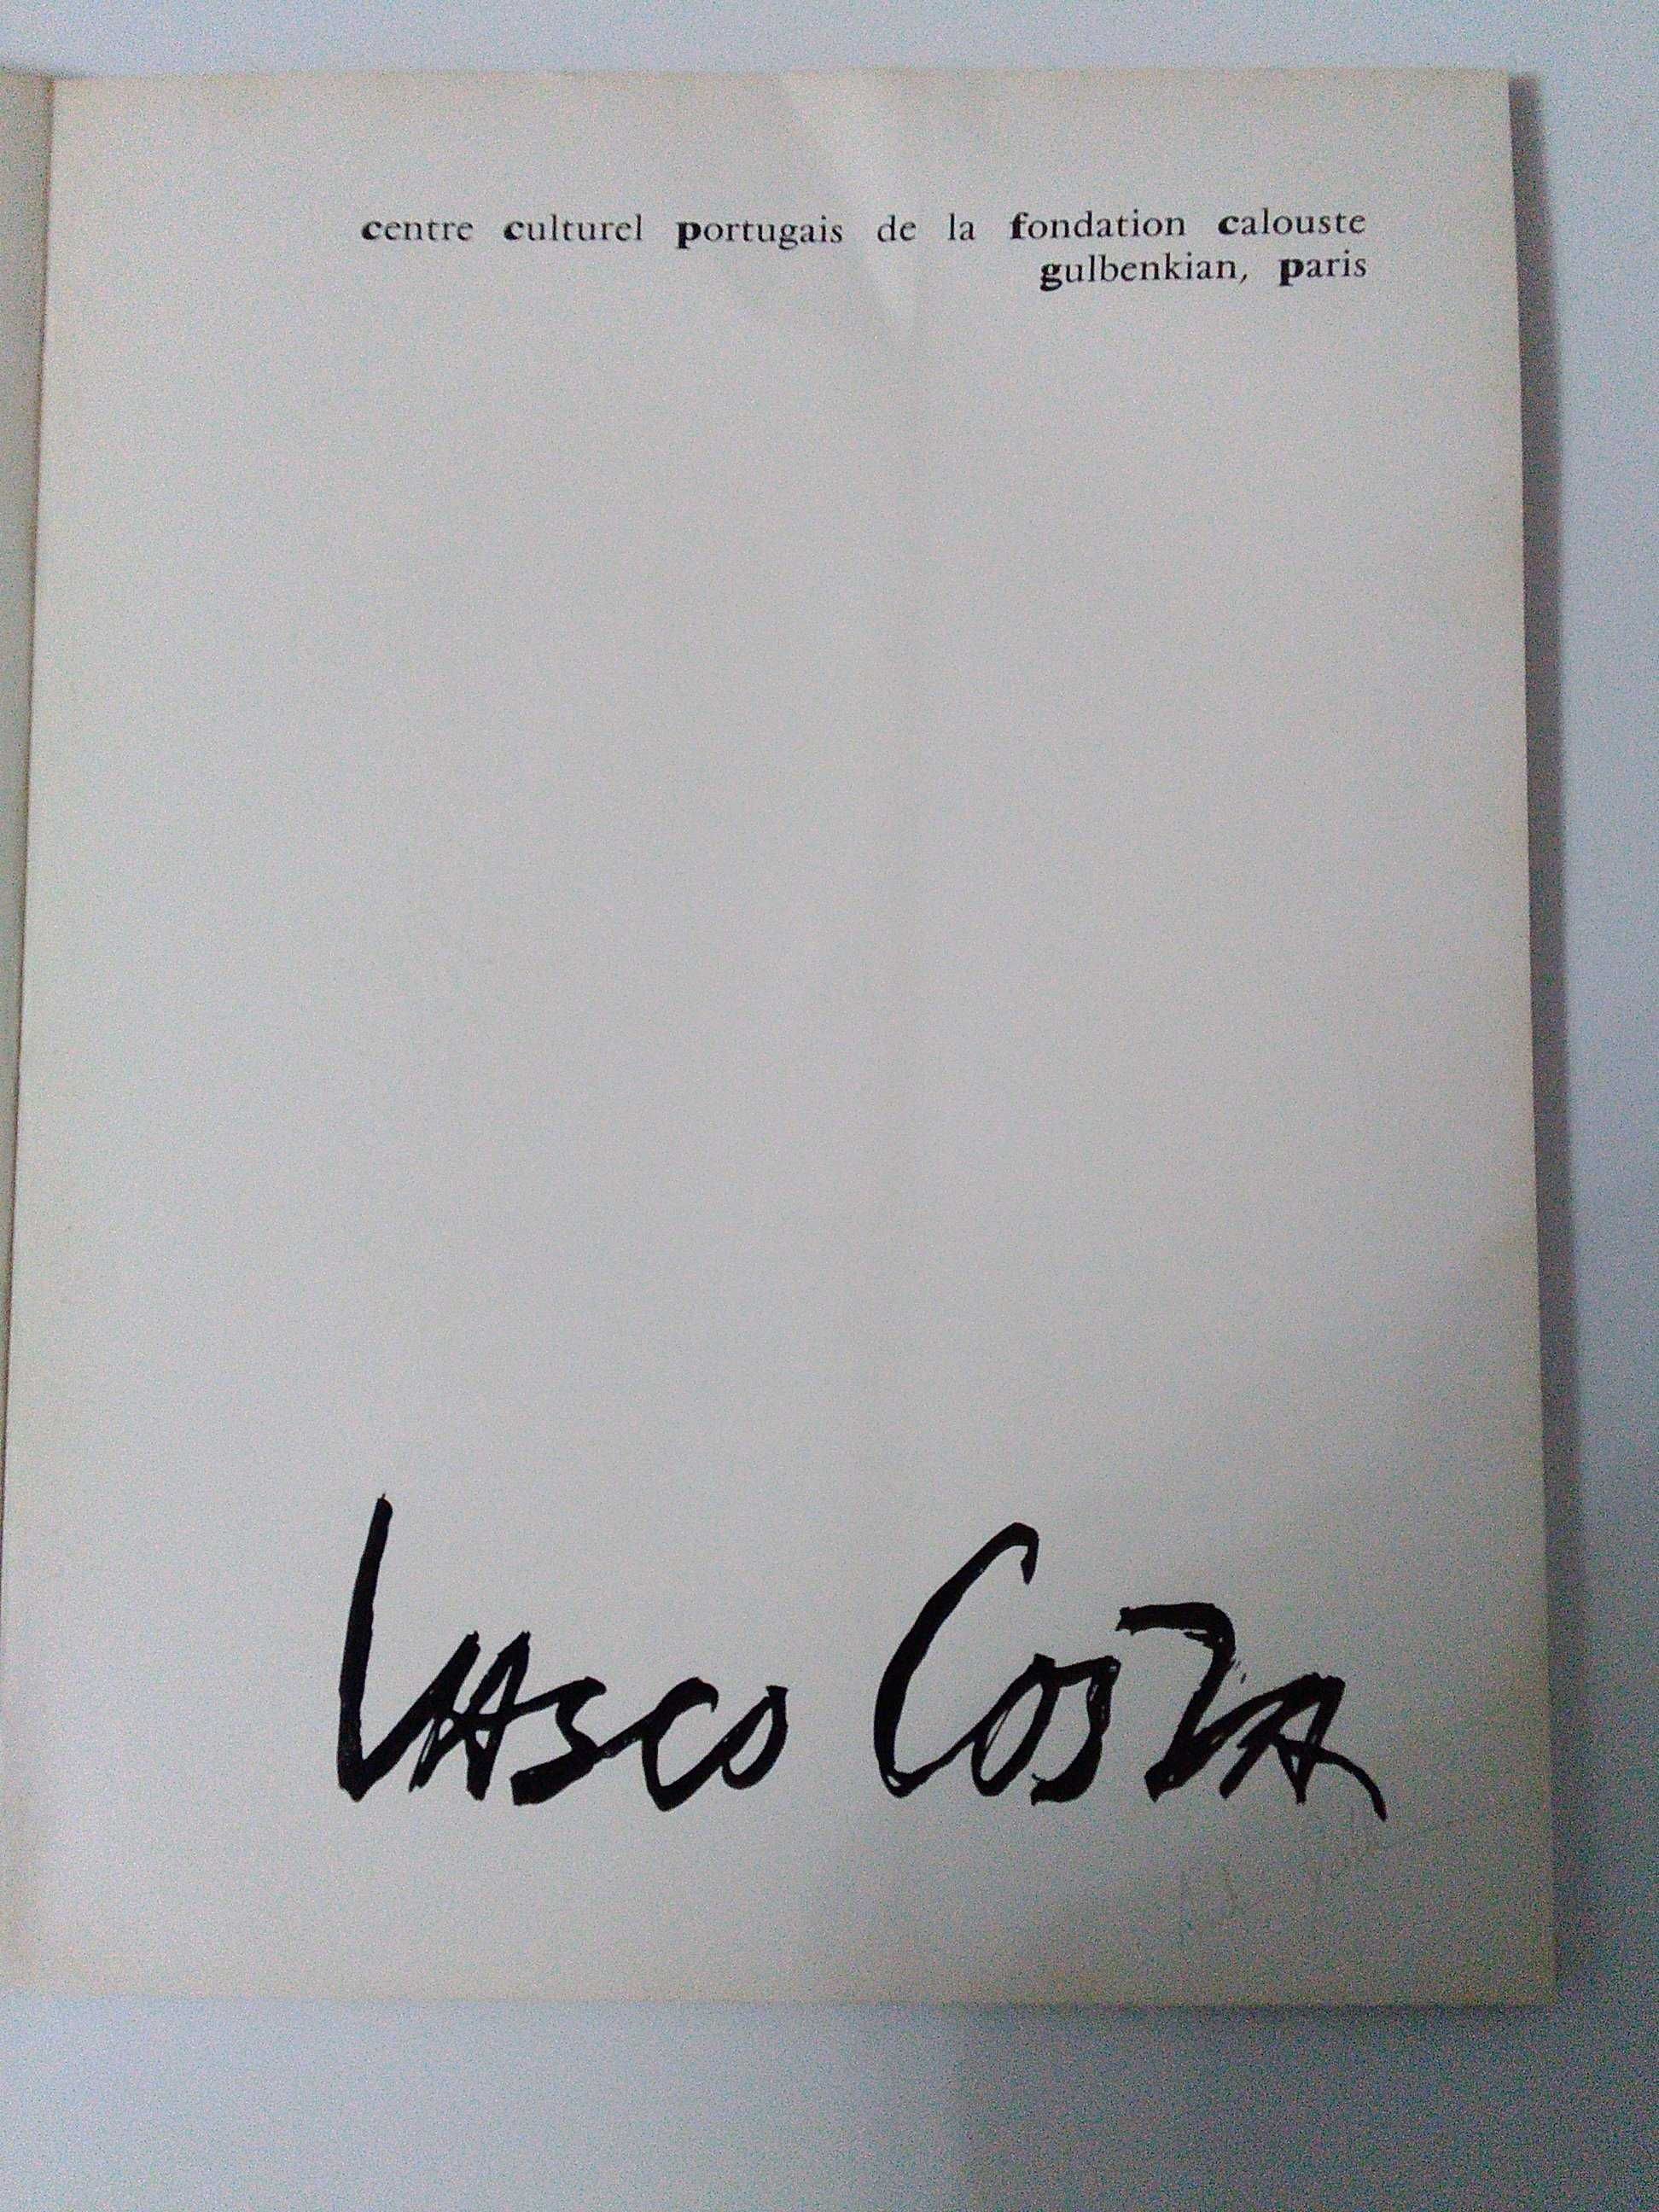 Vasco Costa (1969)